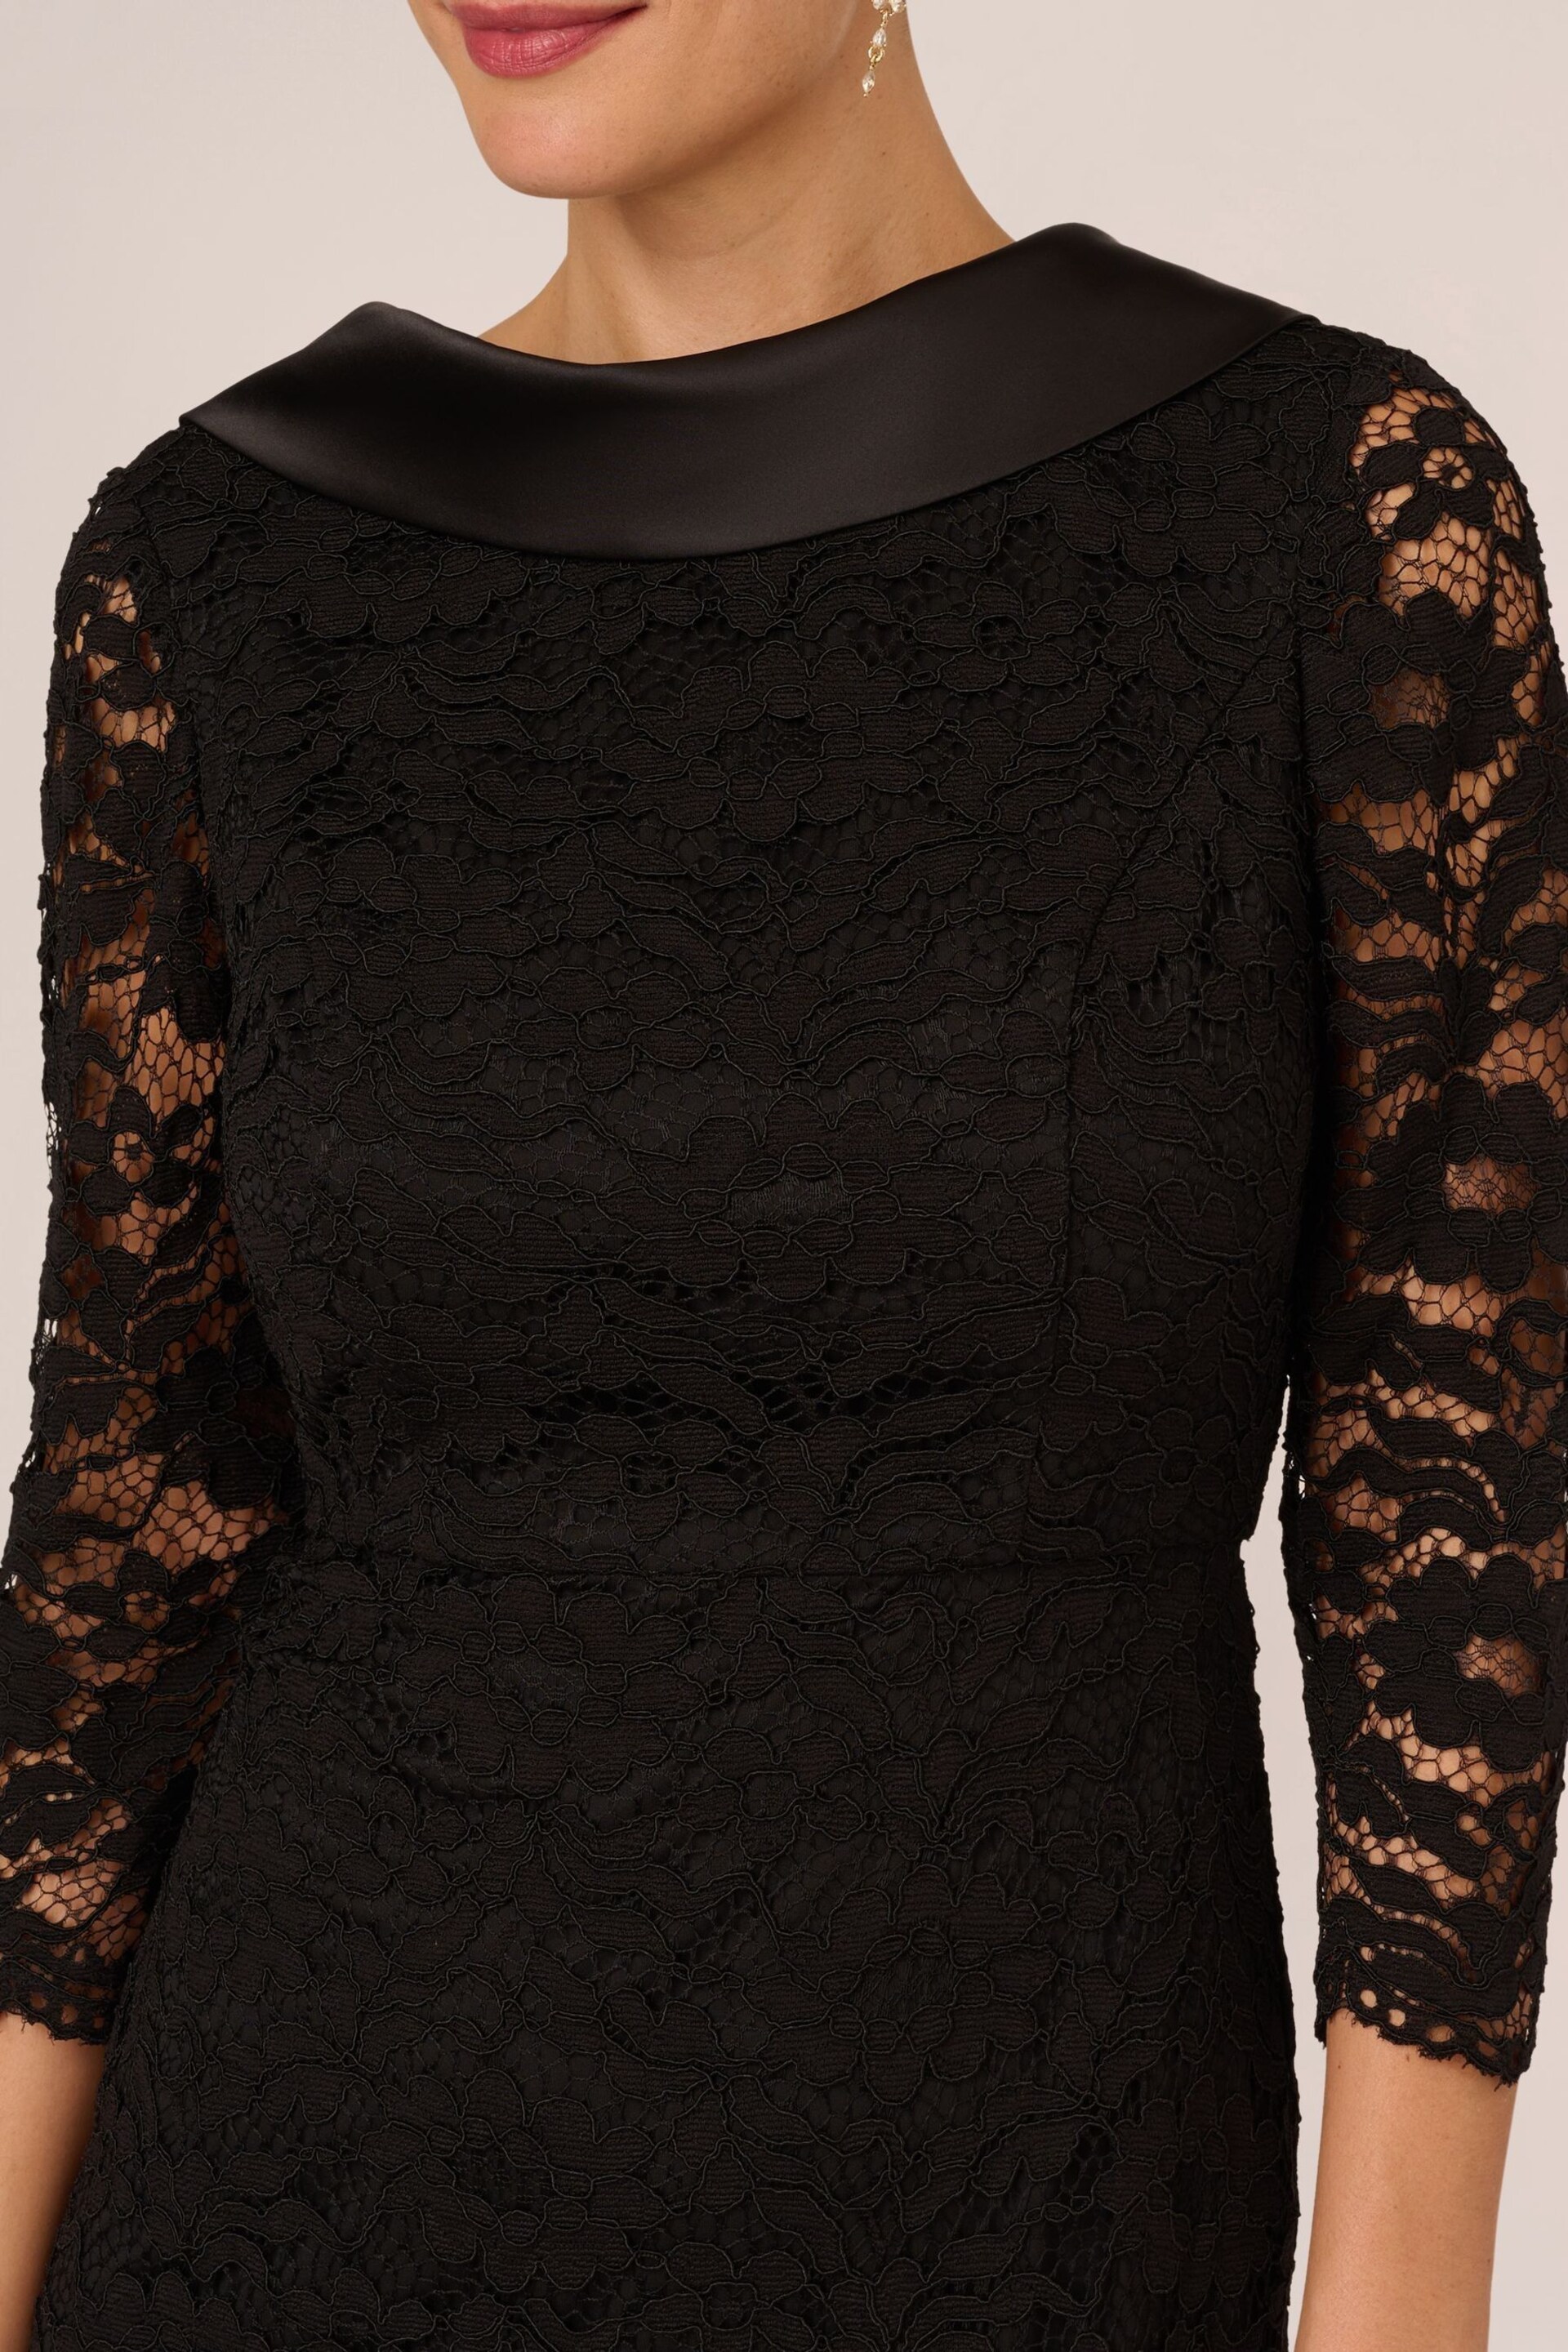 Adrianna Papell Roll Neck Sheath Black Dress - Image 5 of 7